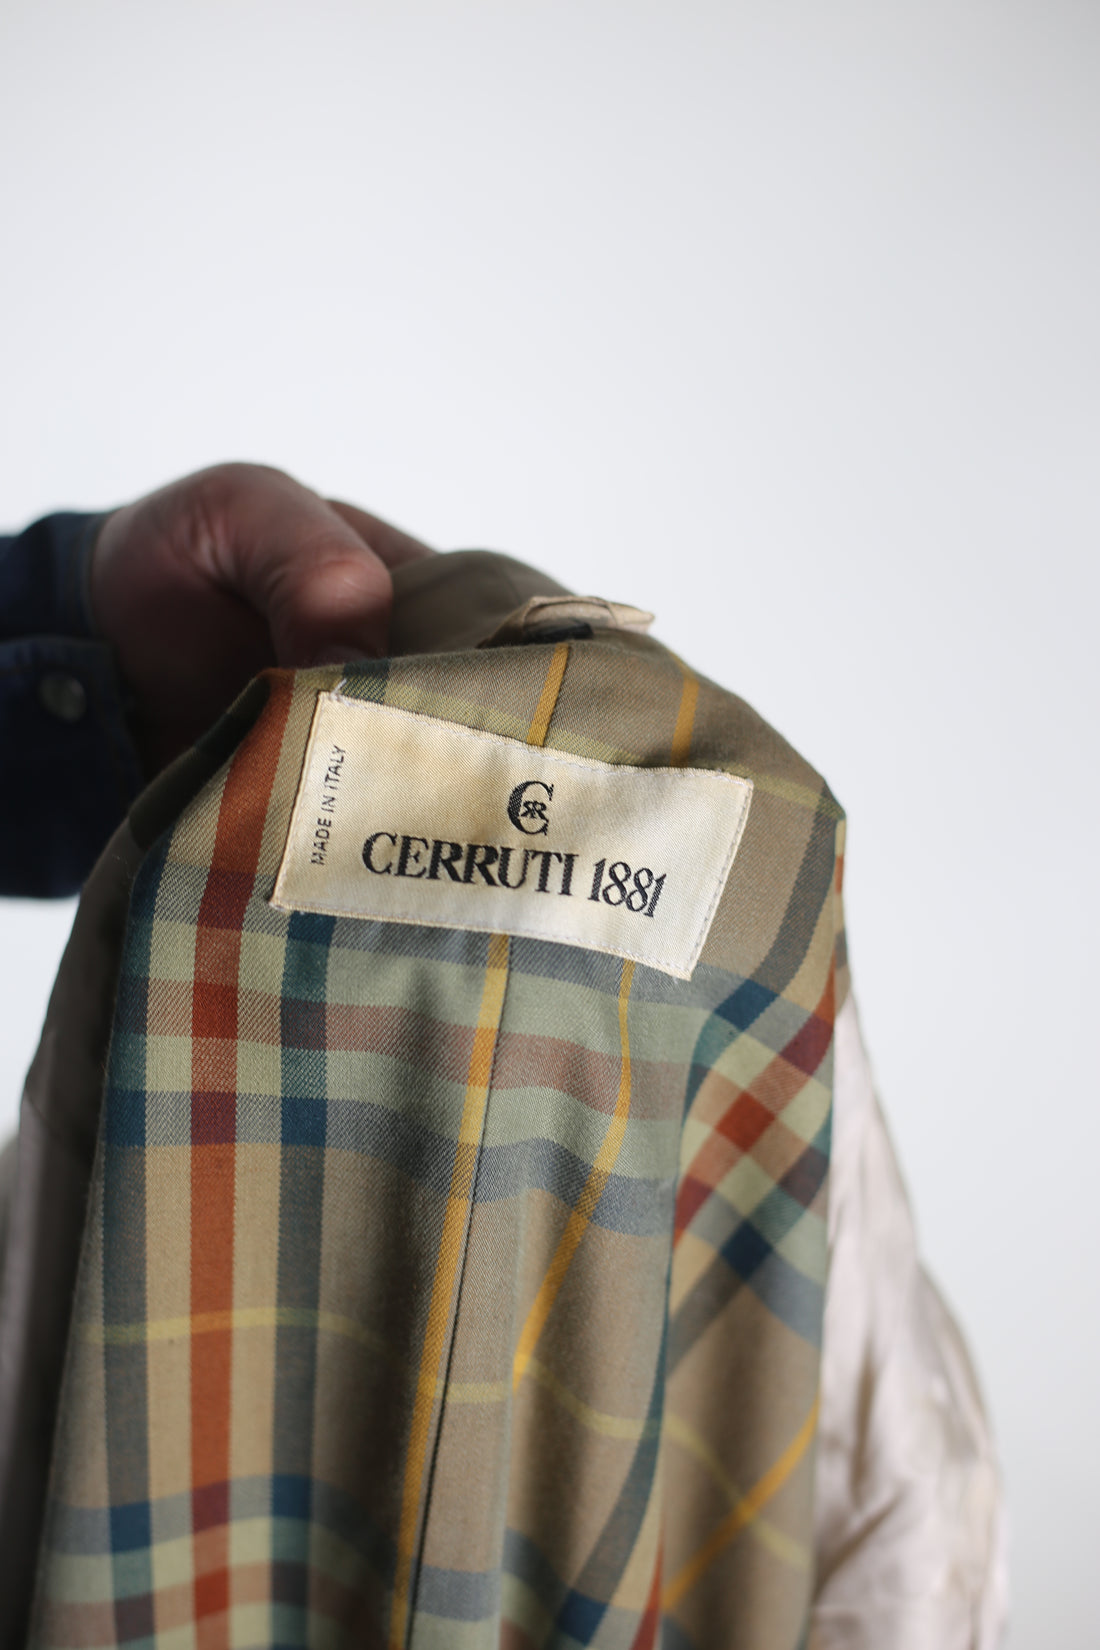 CERRUTI Vintage Trench Coat - XL -